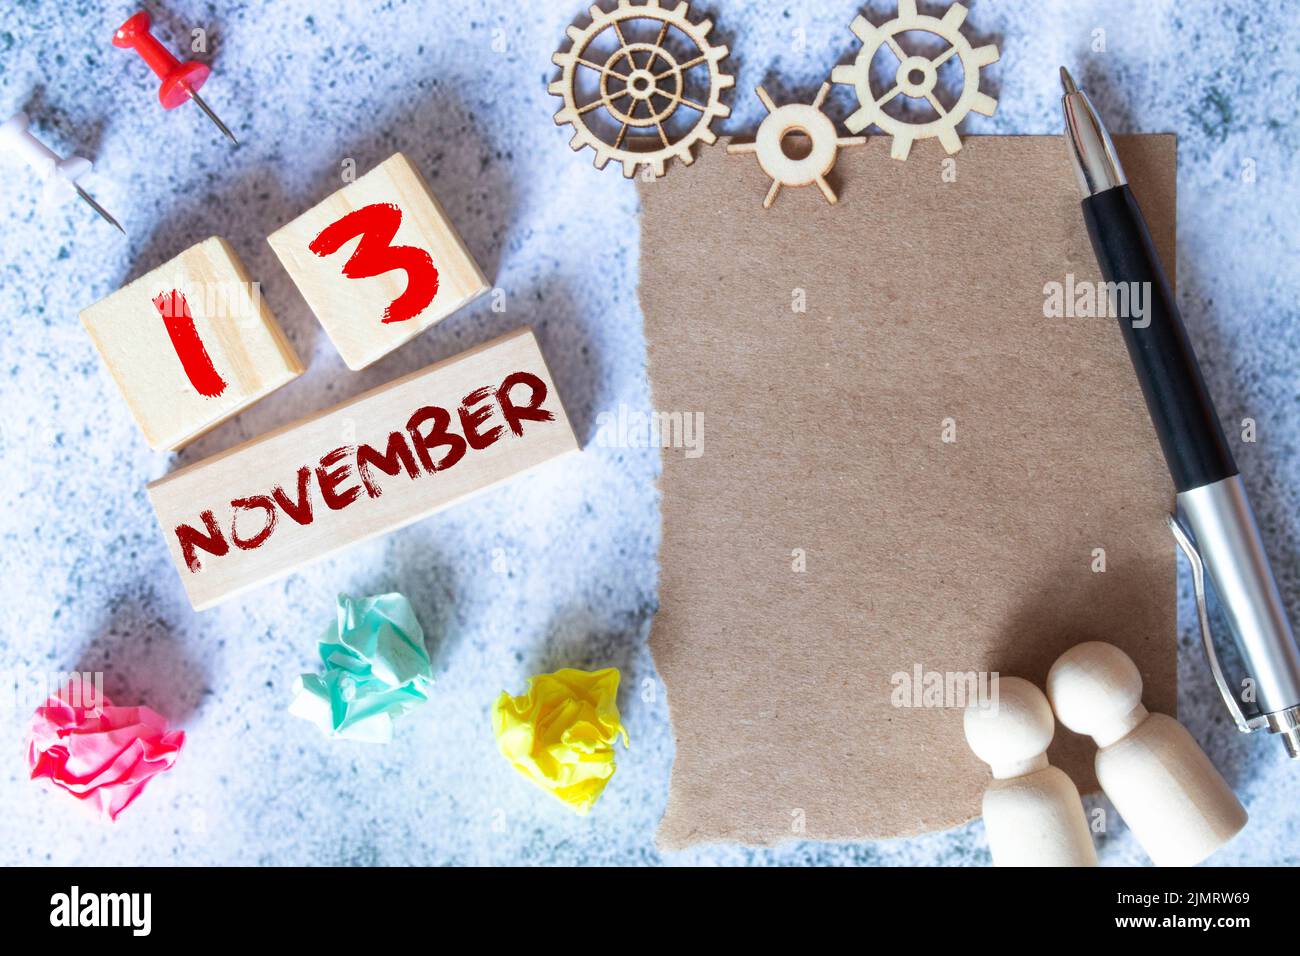 November 13, Natural notebook Calendar, business concept Stock Photo